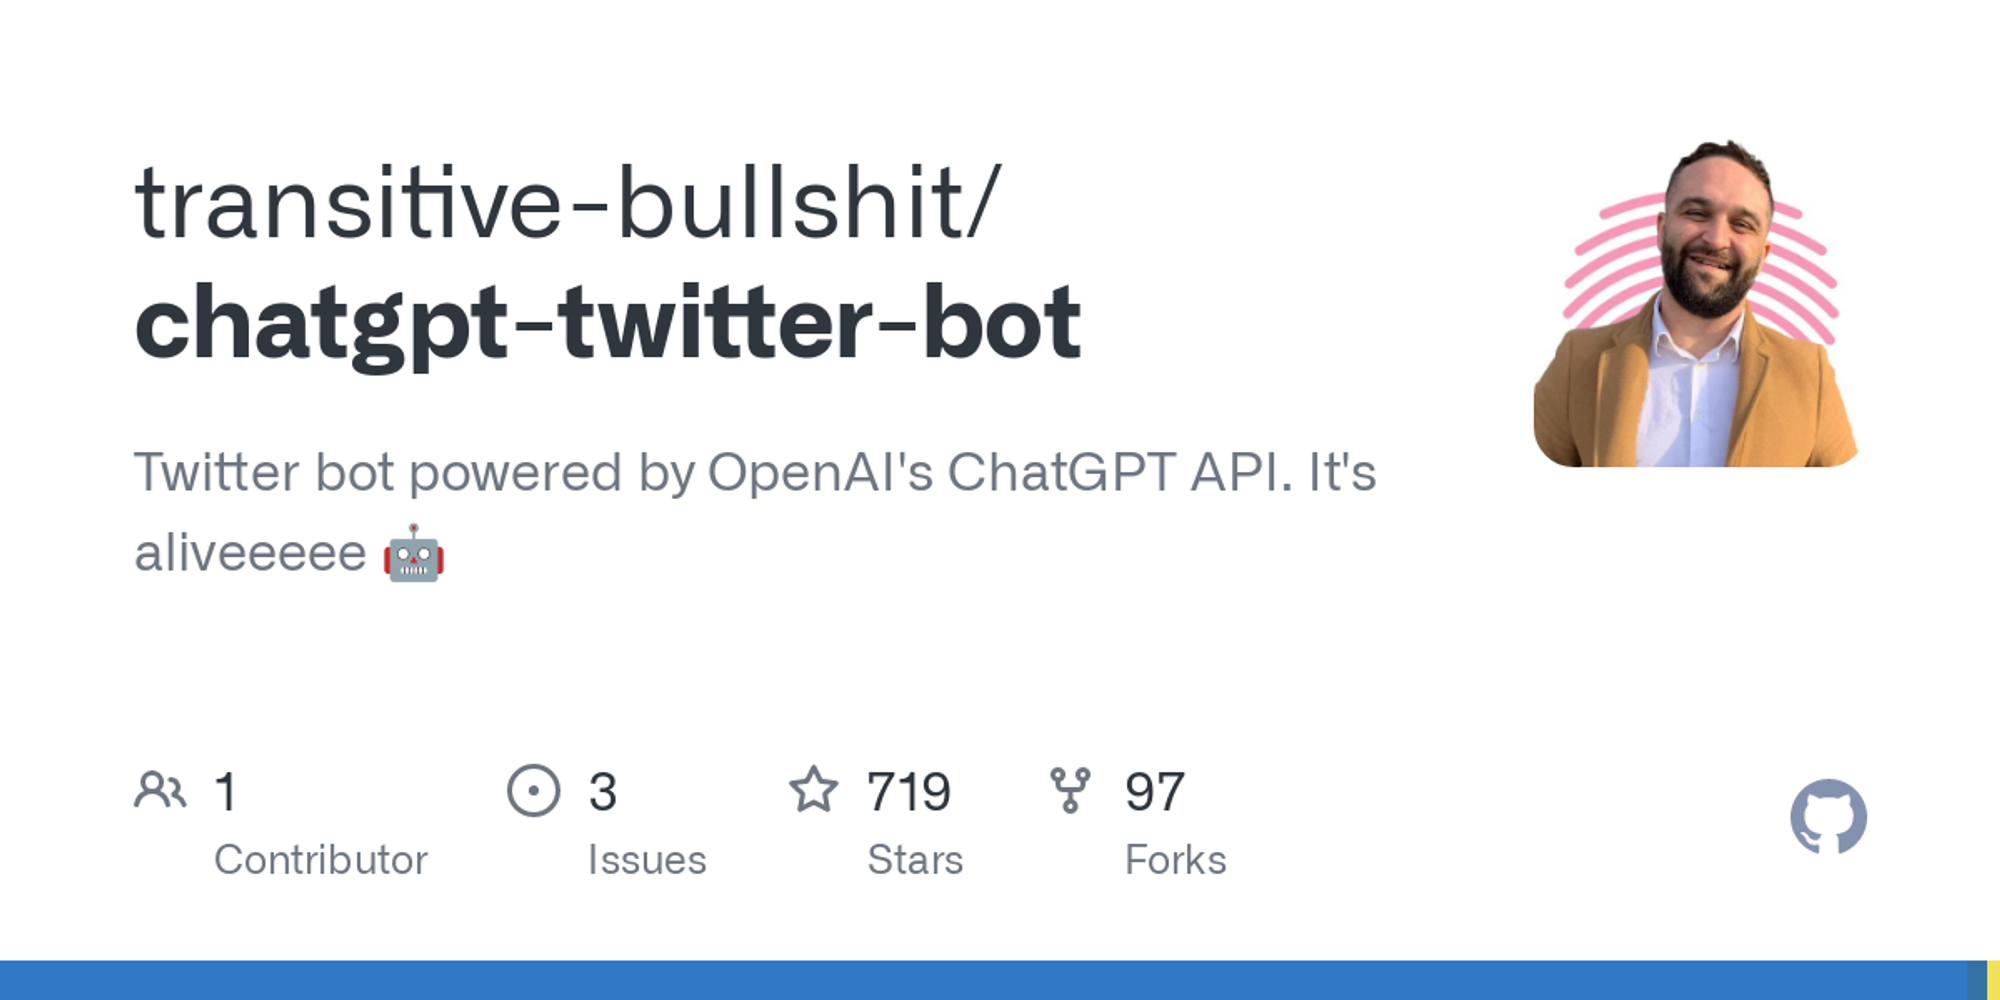 GitHub - transitive-bullshit/chatgpt-twitter-bot: Twitter bot powered by OpenAI's ChatGPT. It's aliveeeee 🤖